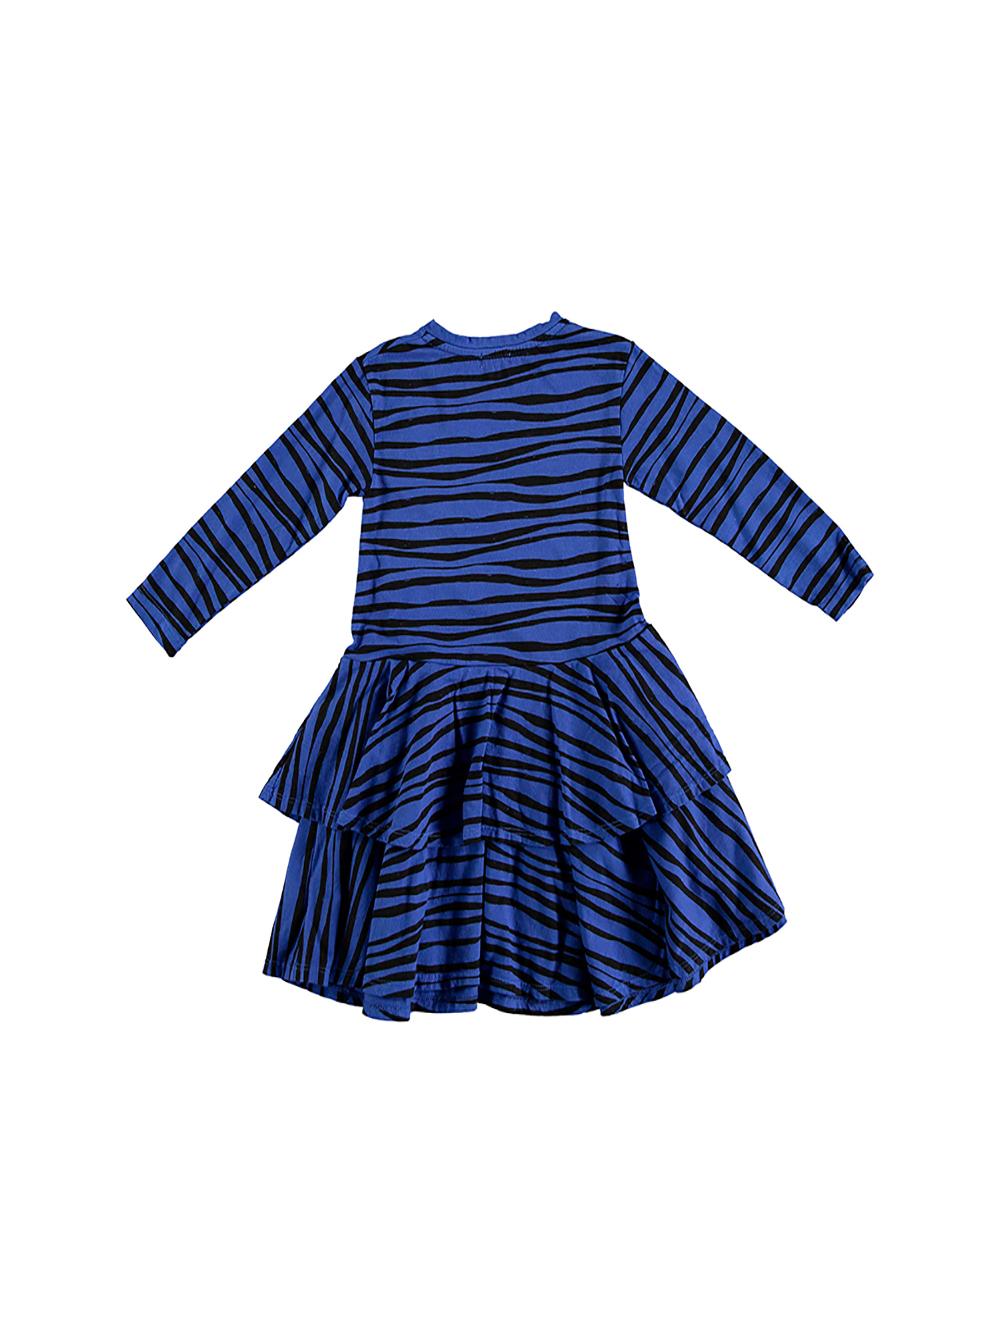 ELECTRIC BLUE ZEBRA PRINT DOUBLE Ruffle Dress